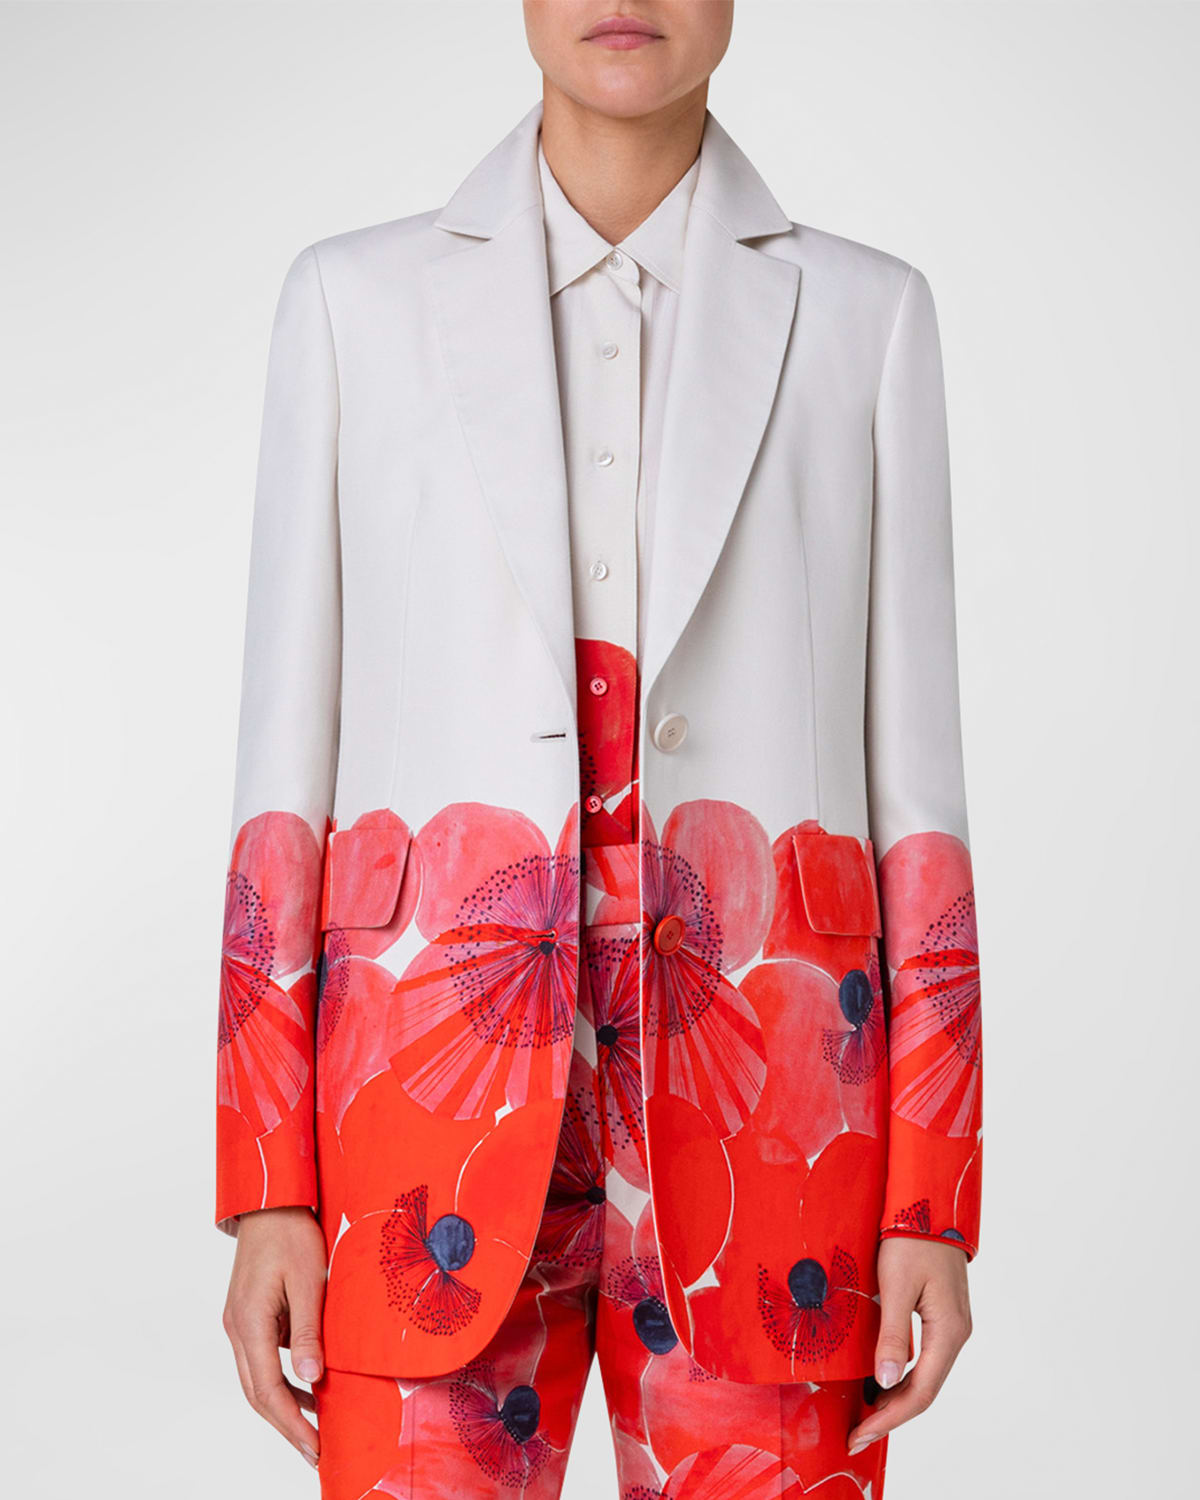 Alvina Poppies Print Blazer Jacket